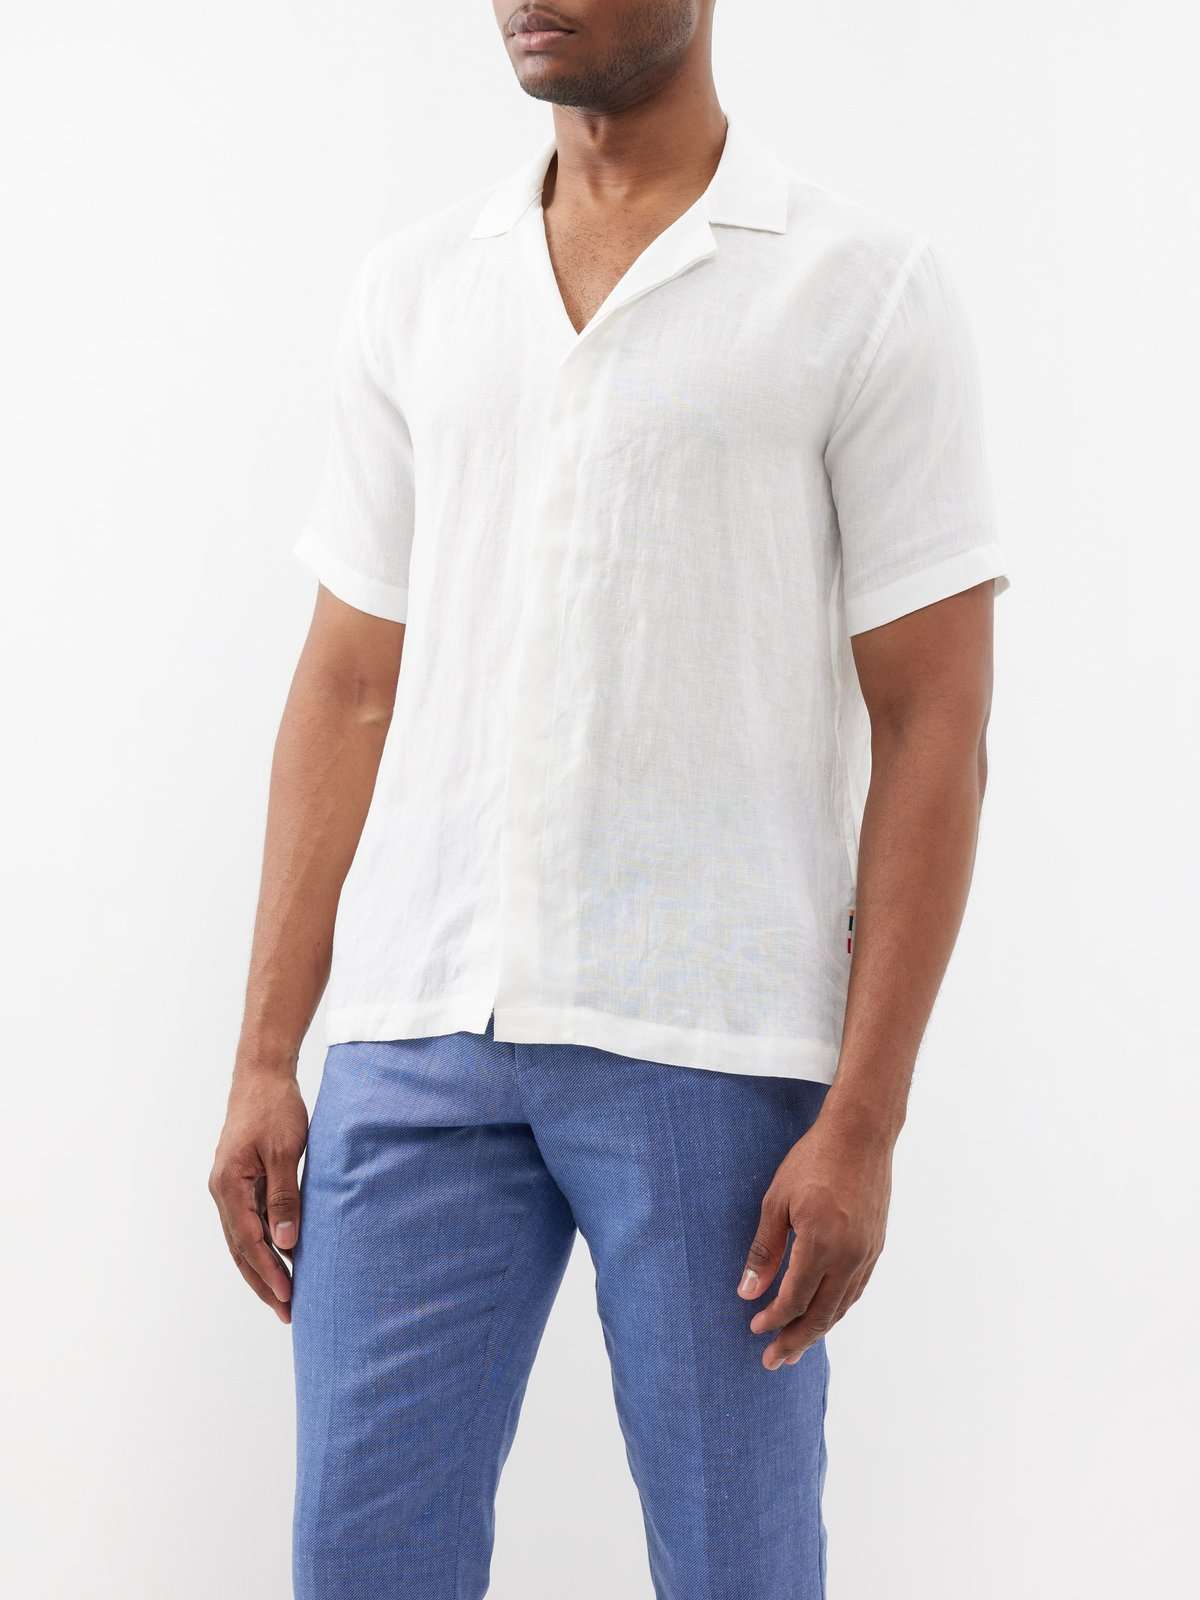 Льняная рубашка Maitan с короткими рукавами